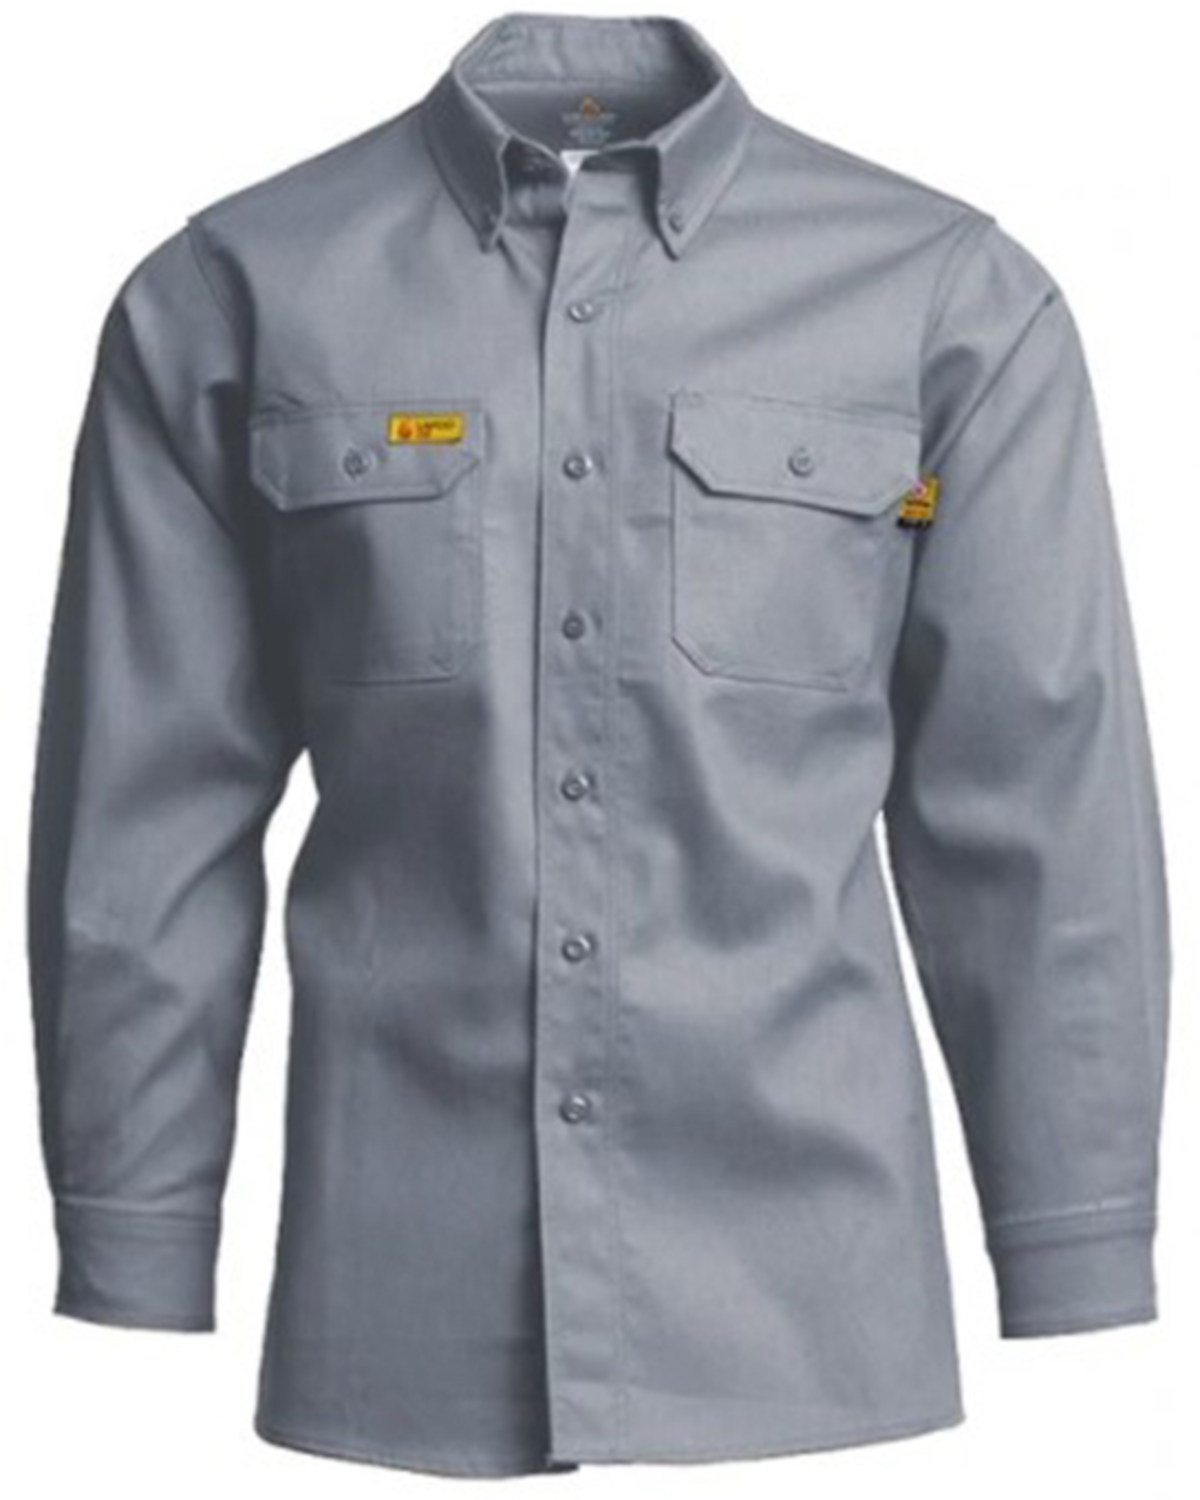 Lapco Men's FR Gold Label Solid Long Sleeve Button Down Uniform Work Shirt - Big